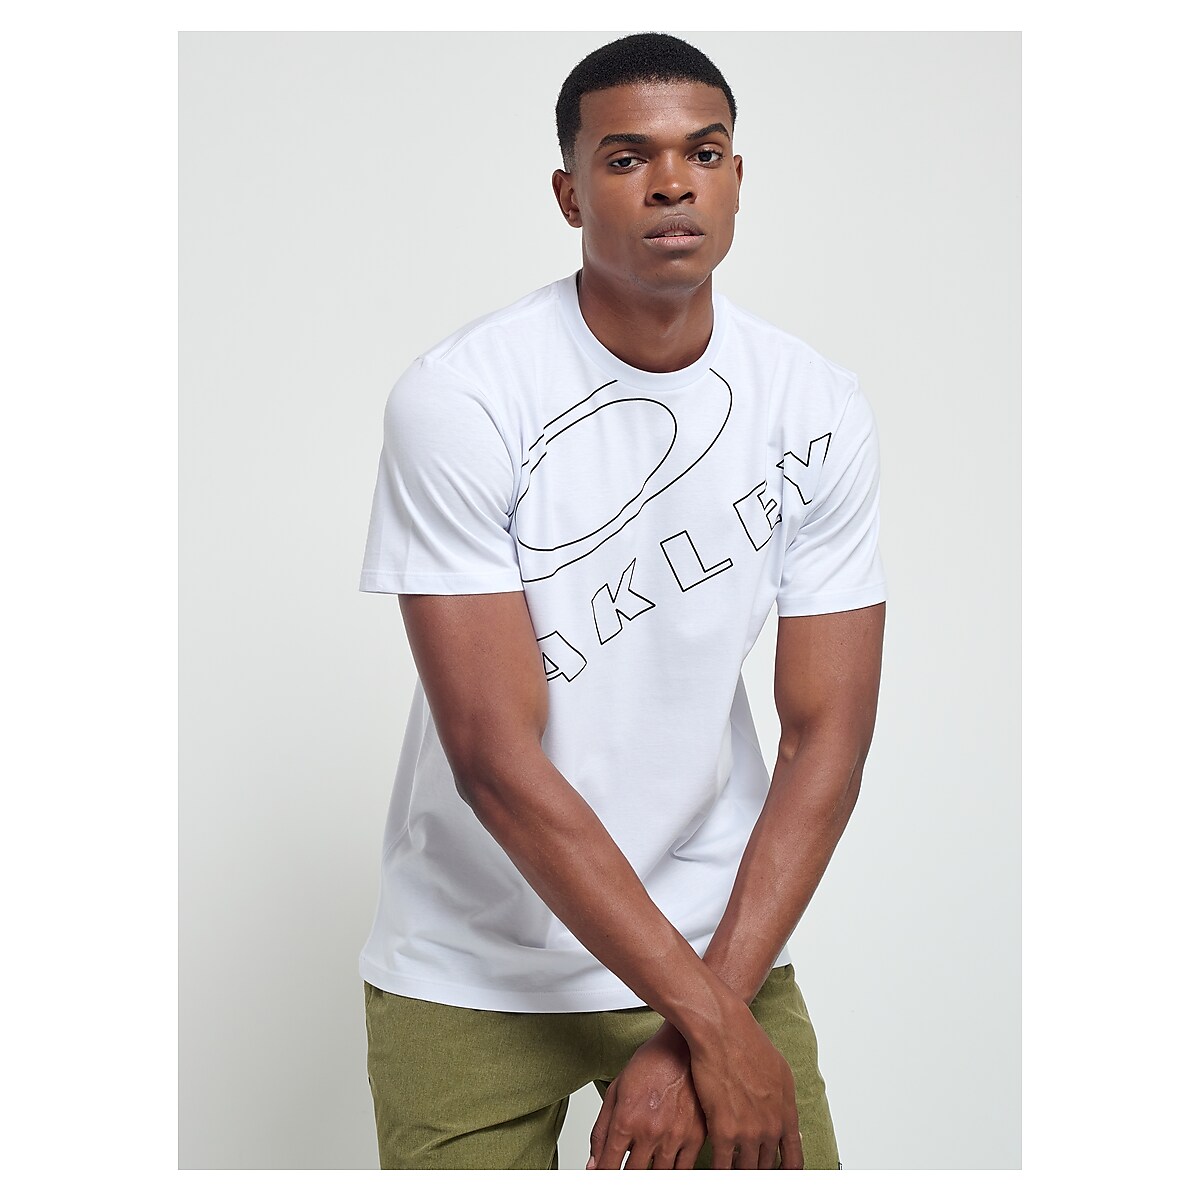 Camiseta Oakley Super Casual Graphic - Masculina